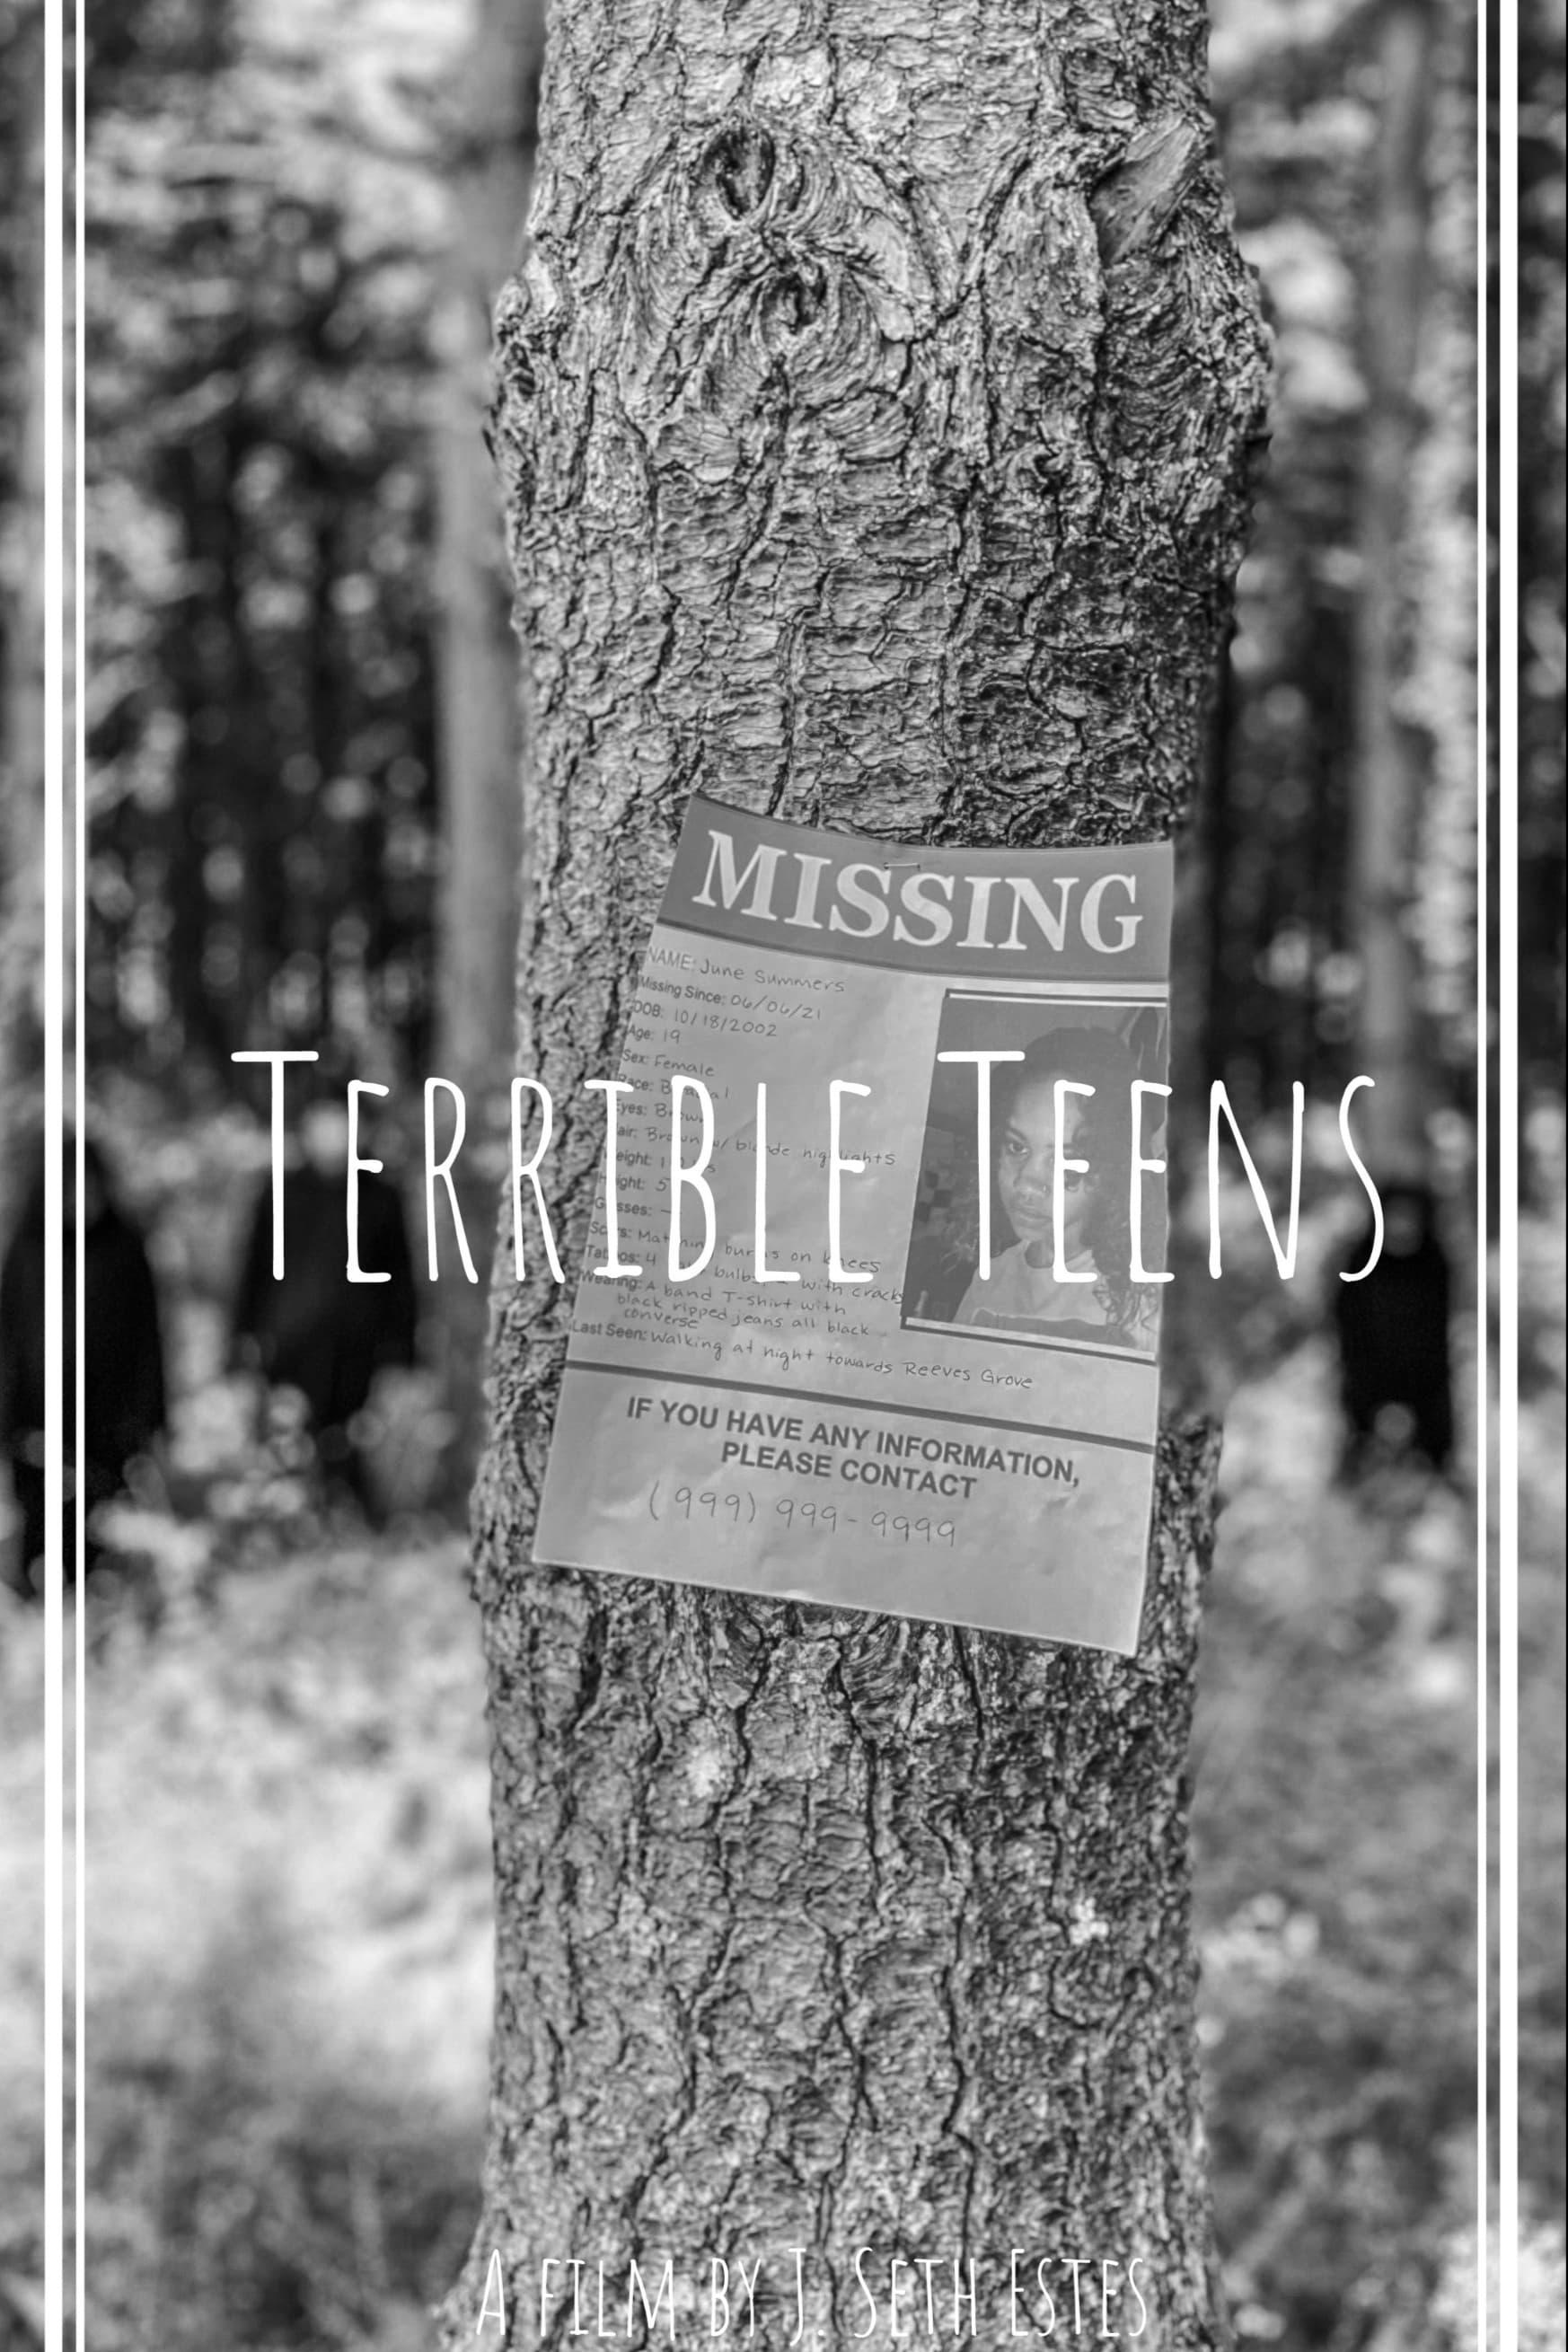 Terrible Teens poster